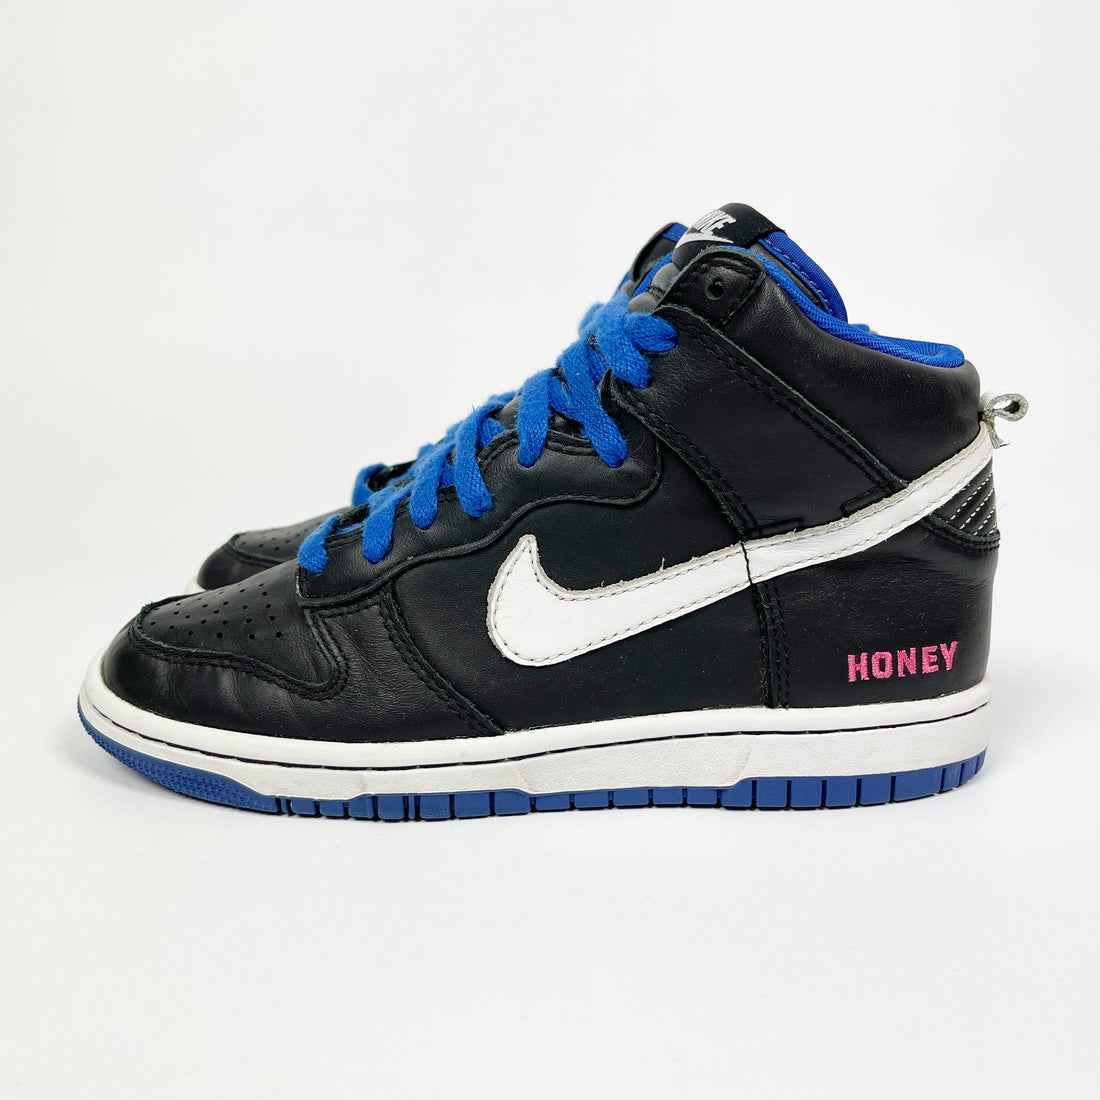 Nike Dunk High ID 'HONEY' 2012 - Vintagetts